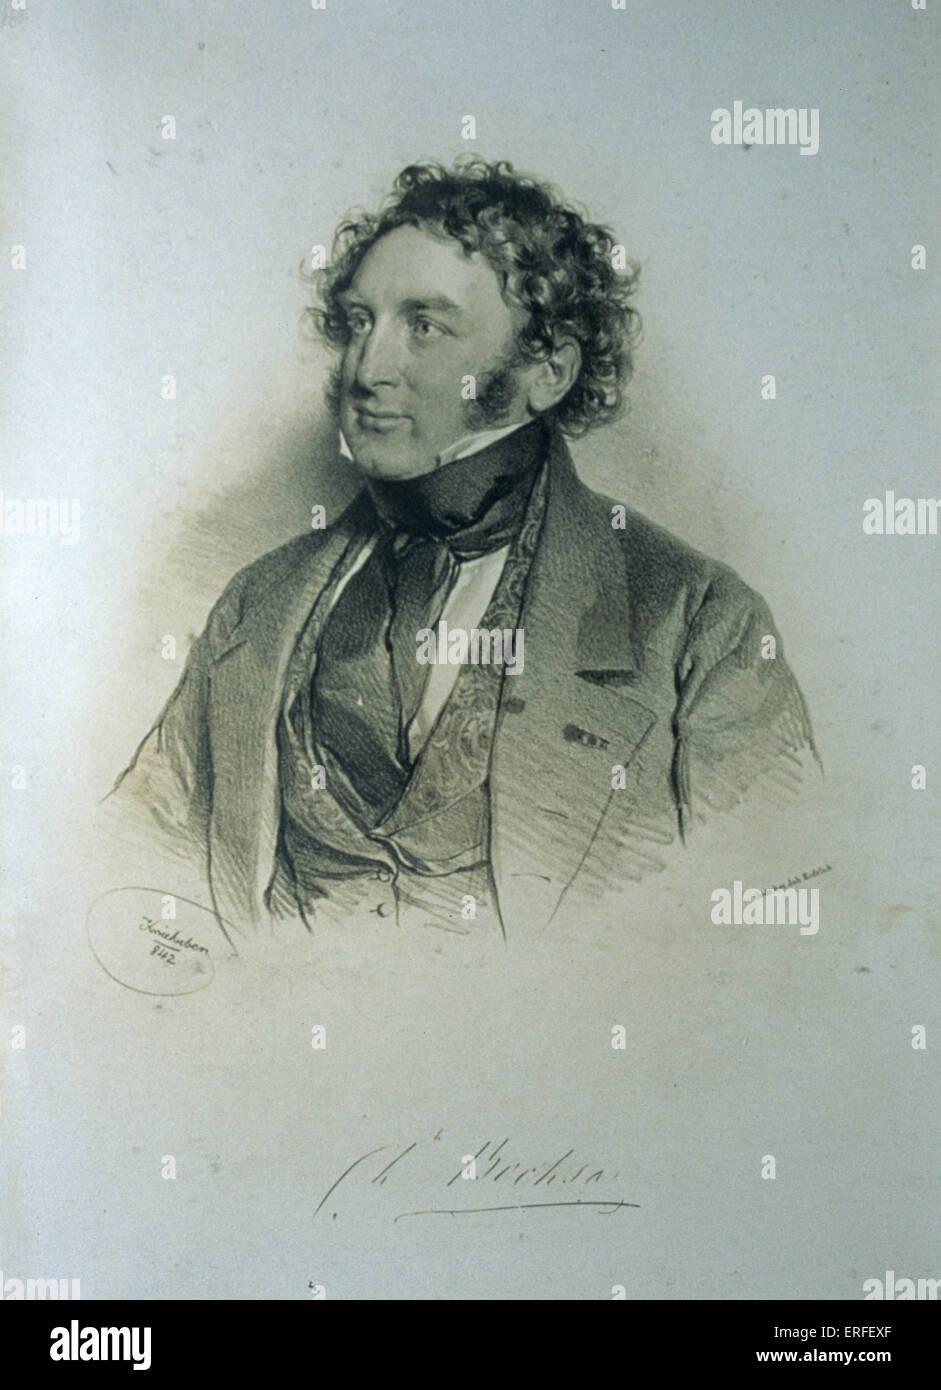 Robert-Nicolas-Charles Bochsa, French harpist, 1789-1856. Stock Photo